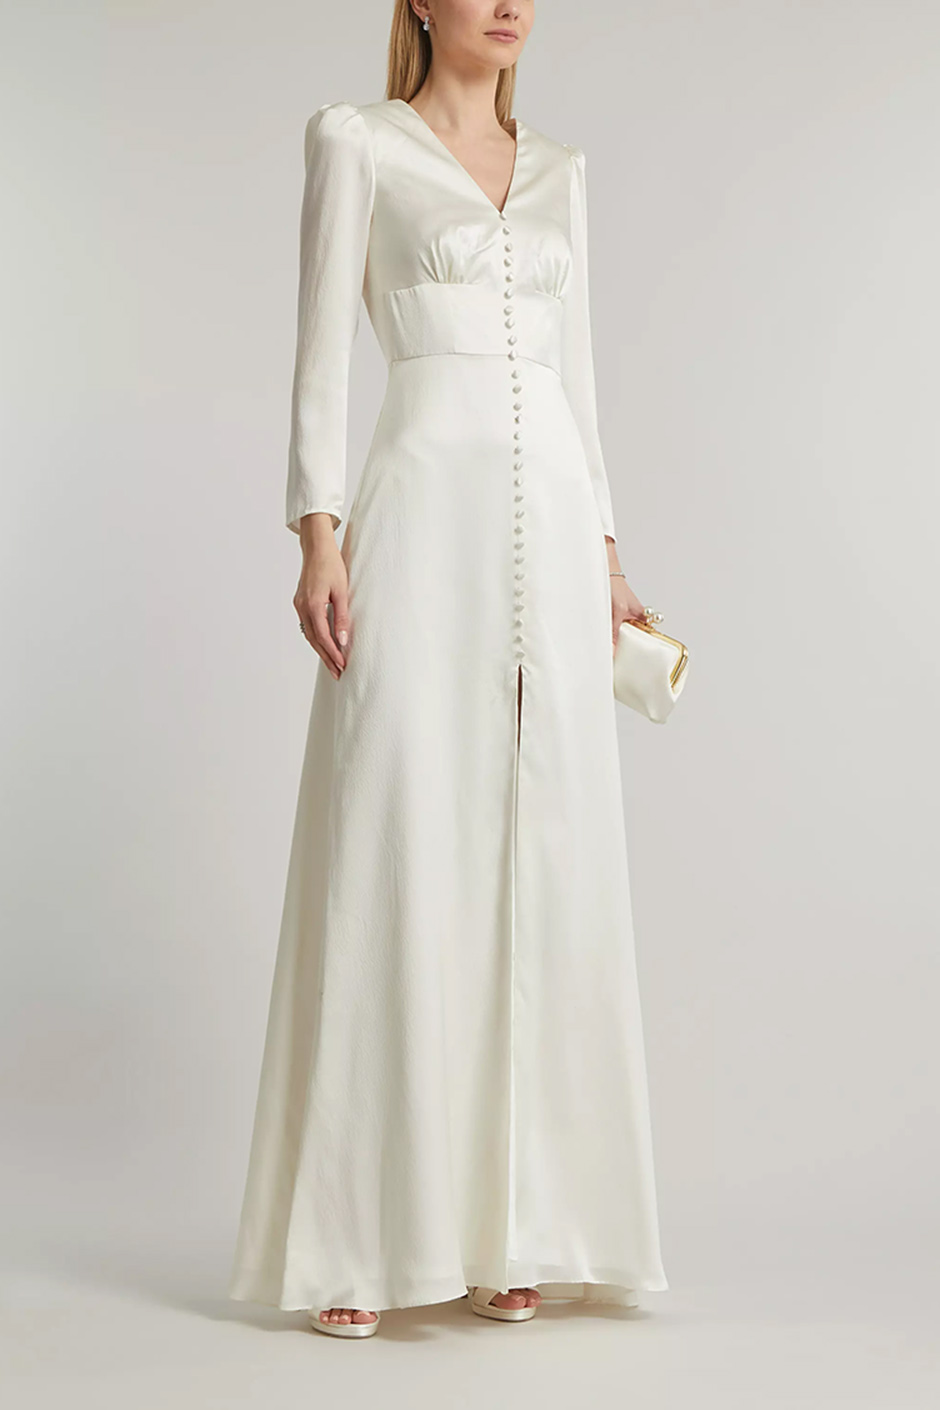 liberty-london-long-sleeve-wedding-dress.jpg